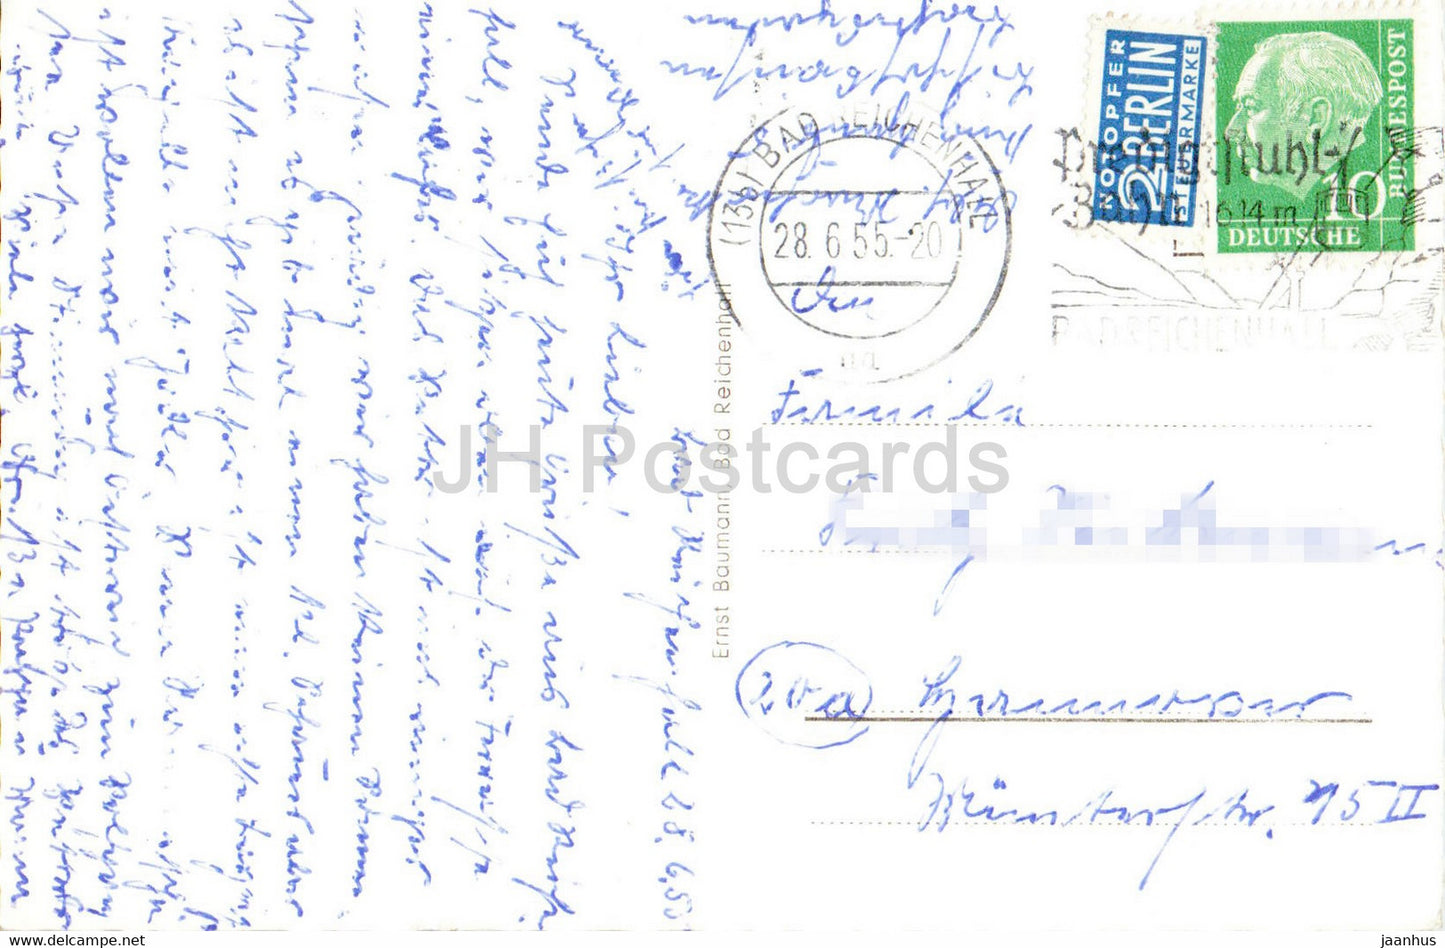 Bad Reichenhall von Nonn - carte postale ancienne - 1955 - Allemagne - utilisé